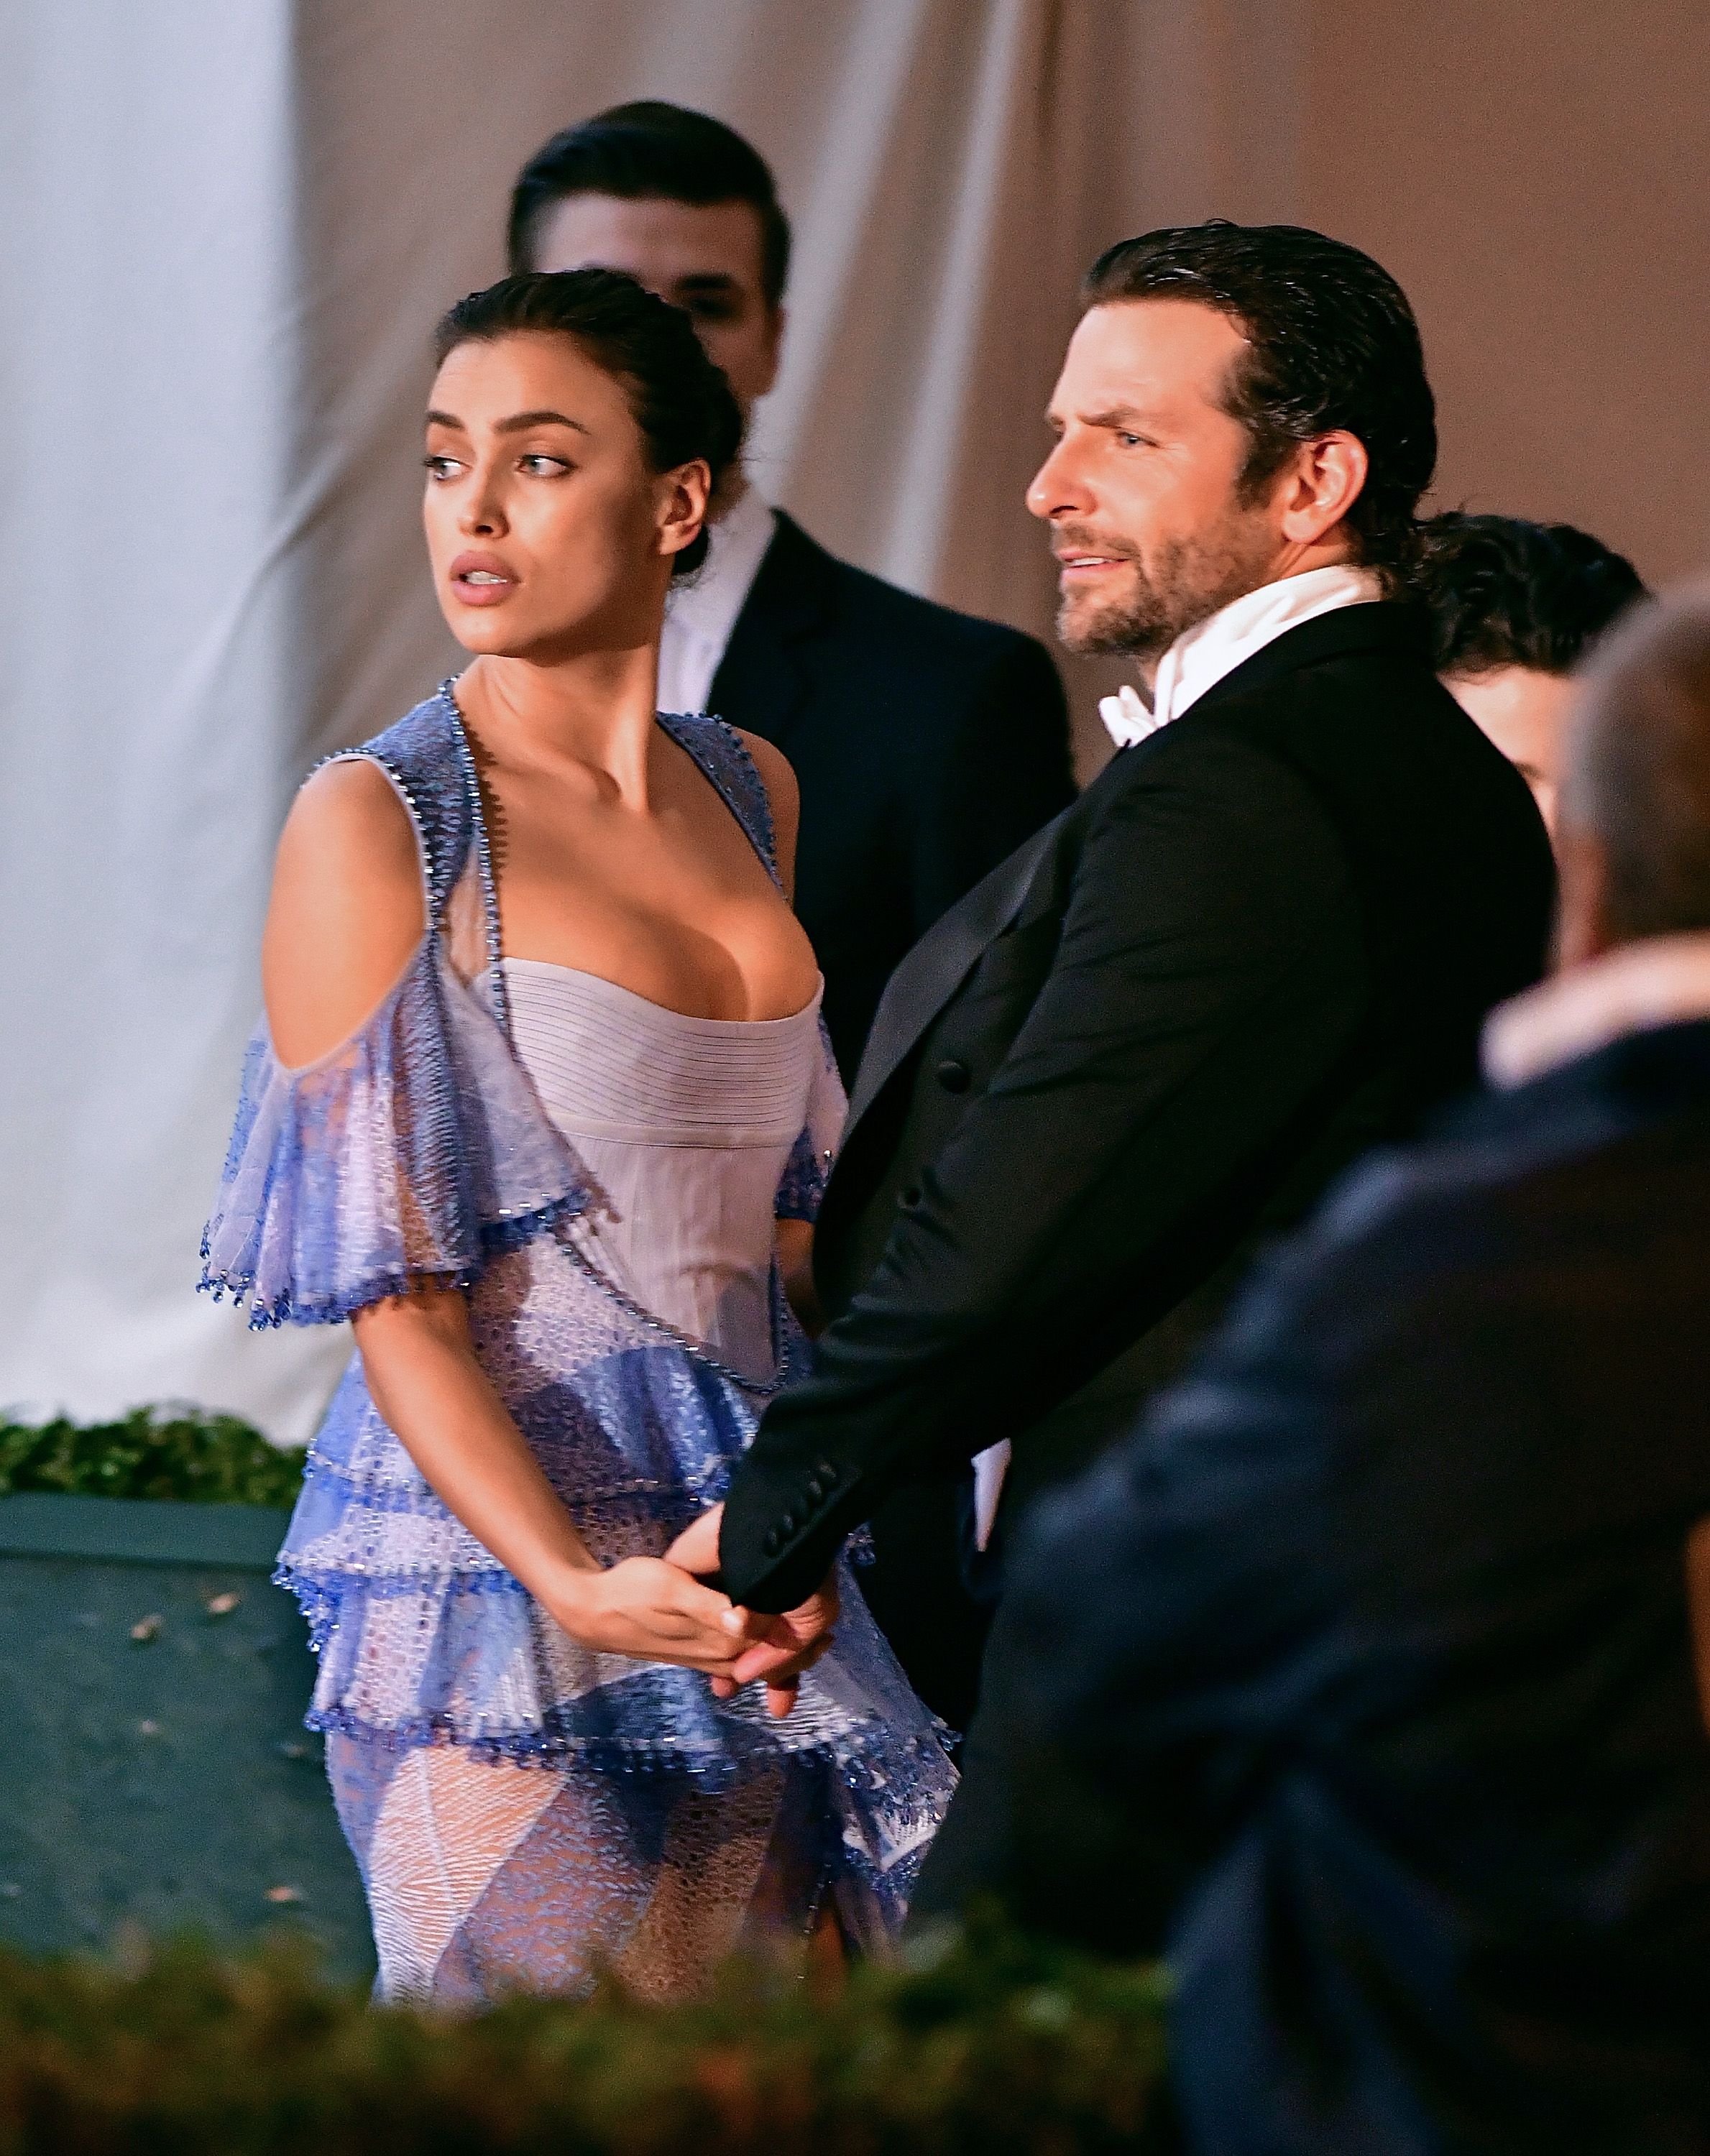 Bradley Cooper, Irina Shayk: A Timeline of Their Romance